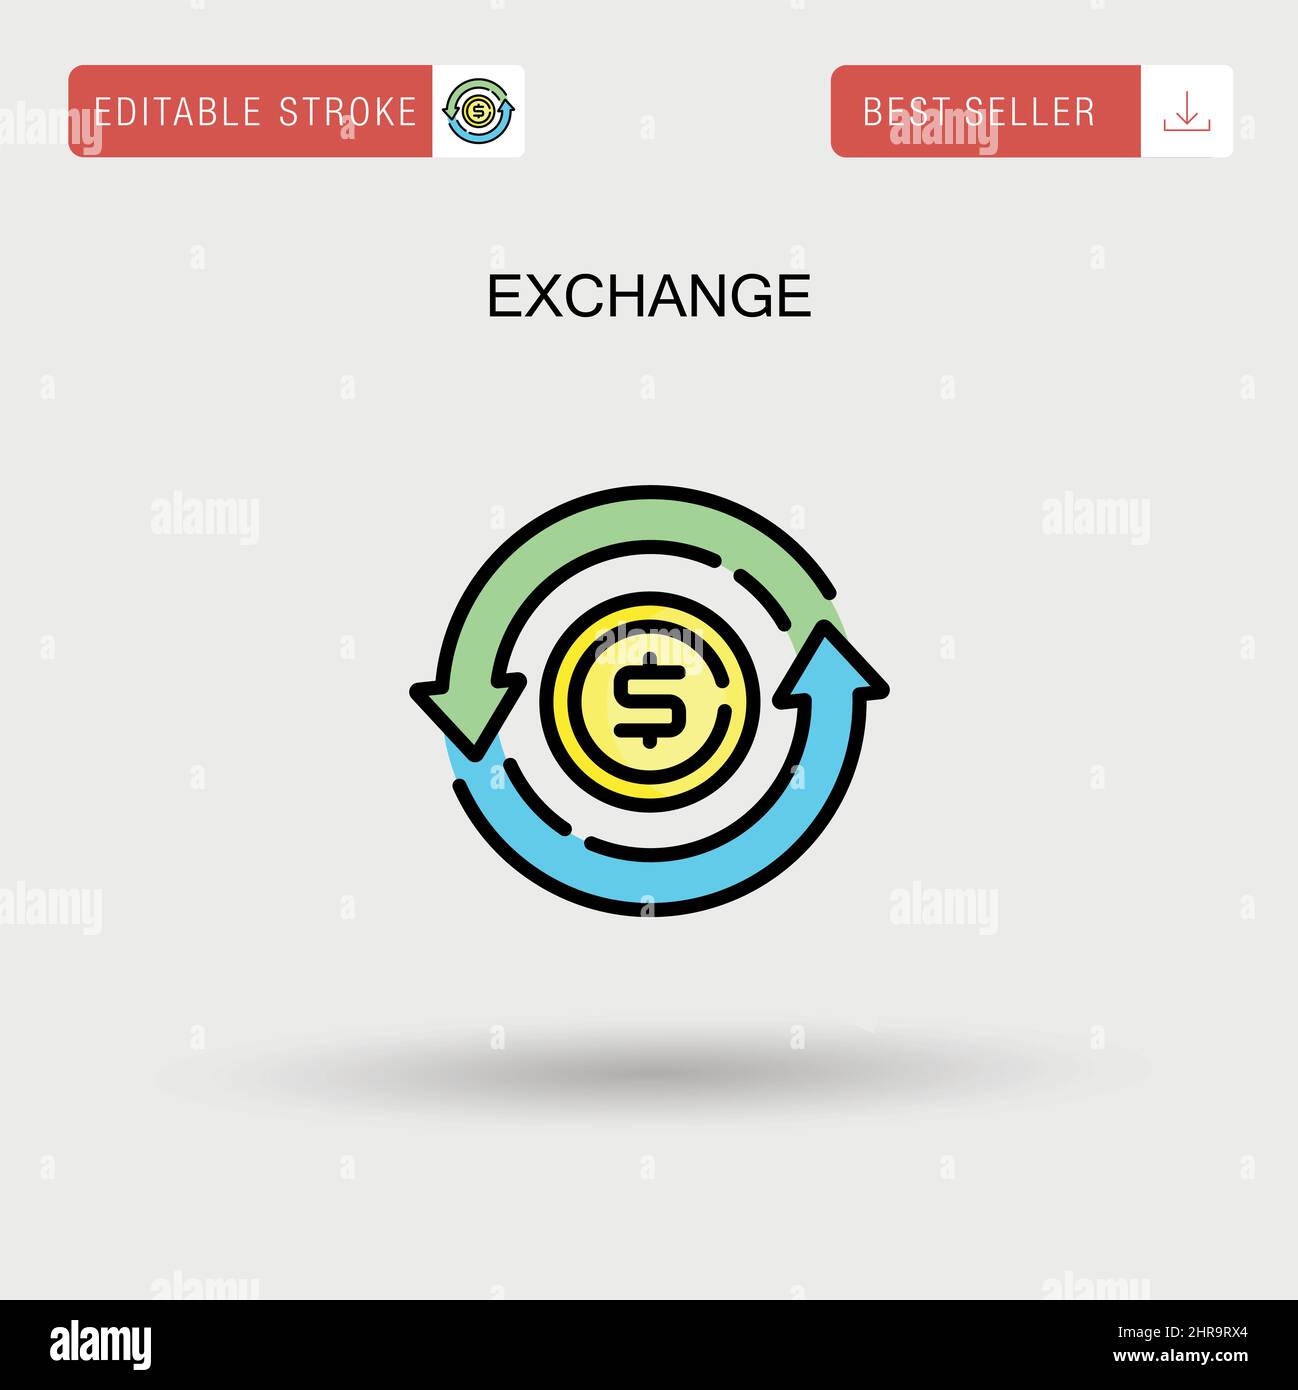 Exchange Simple vector icon. Stock Vector